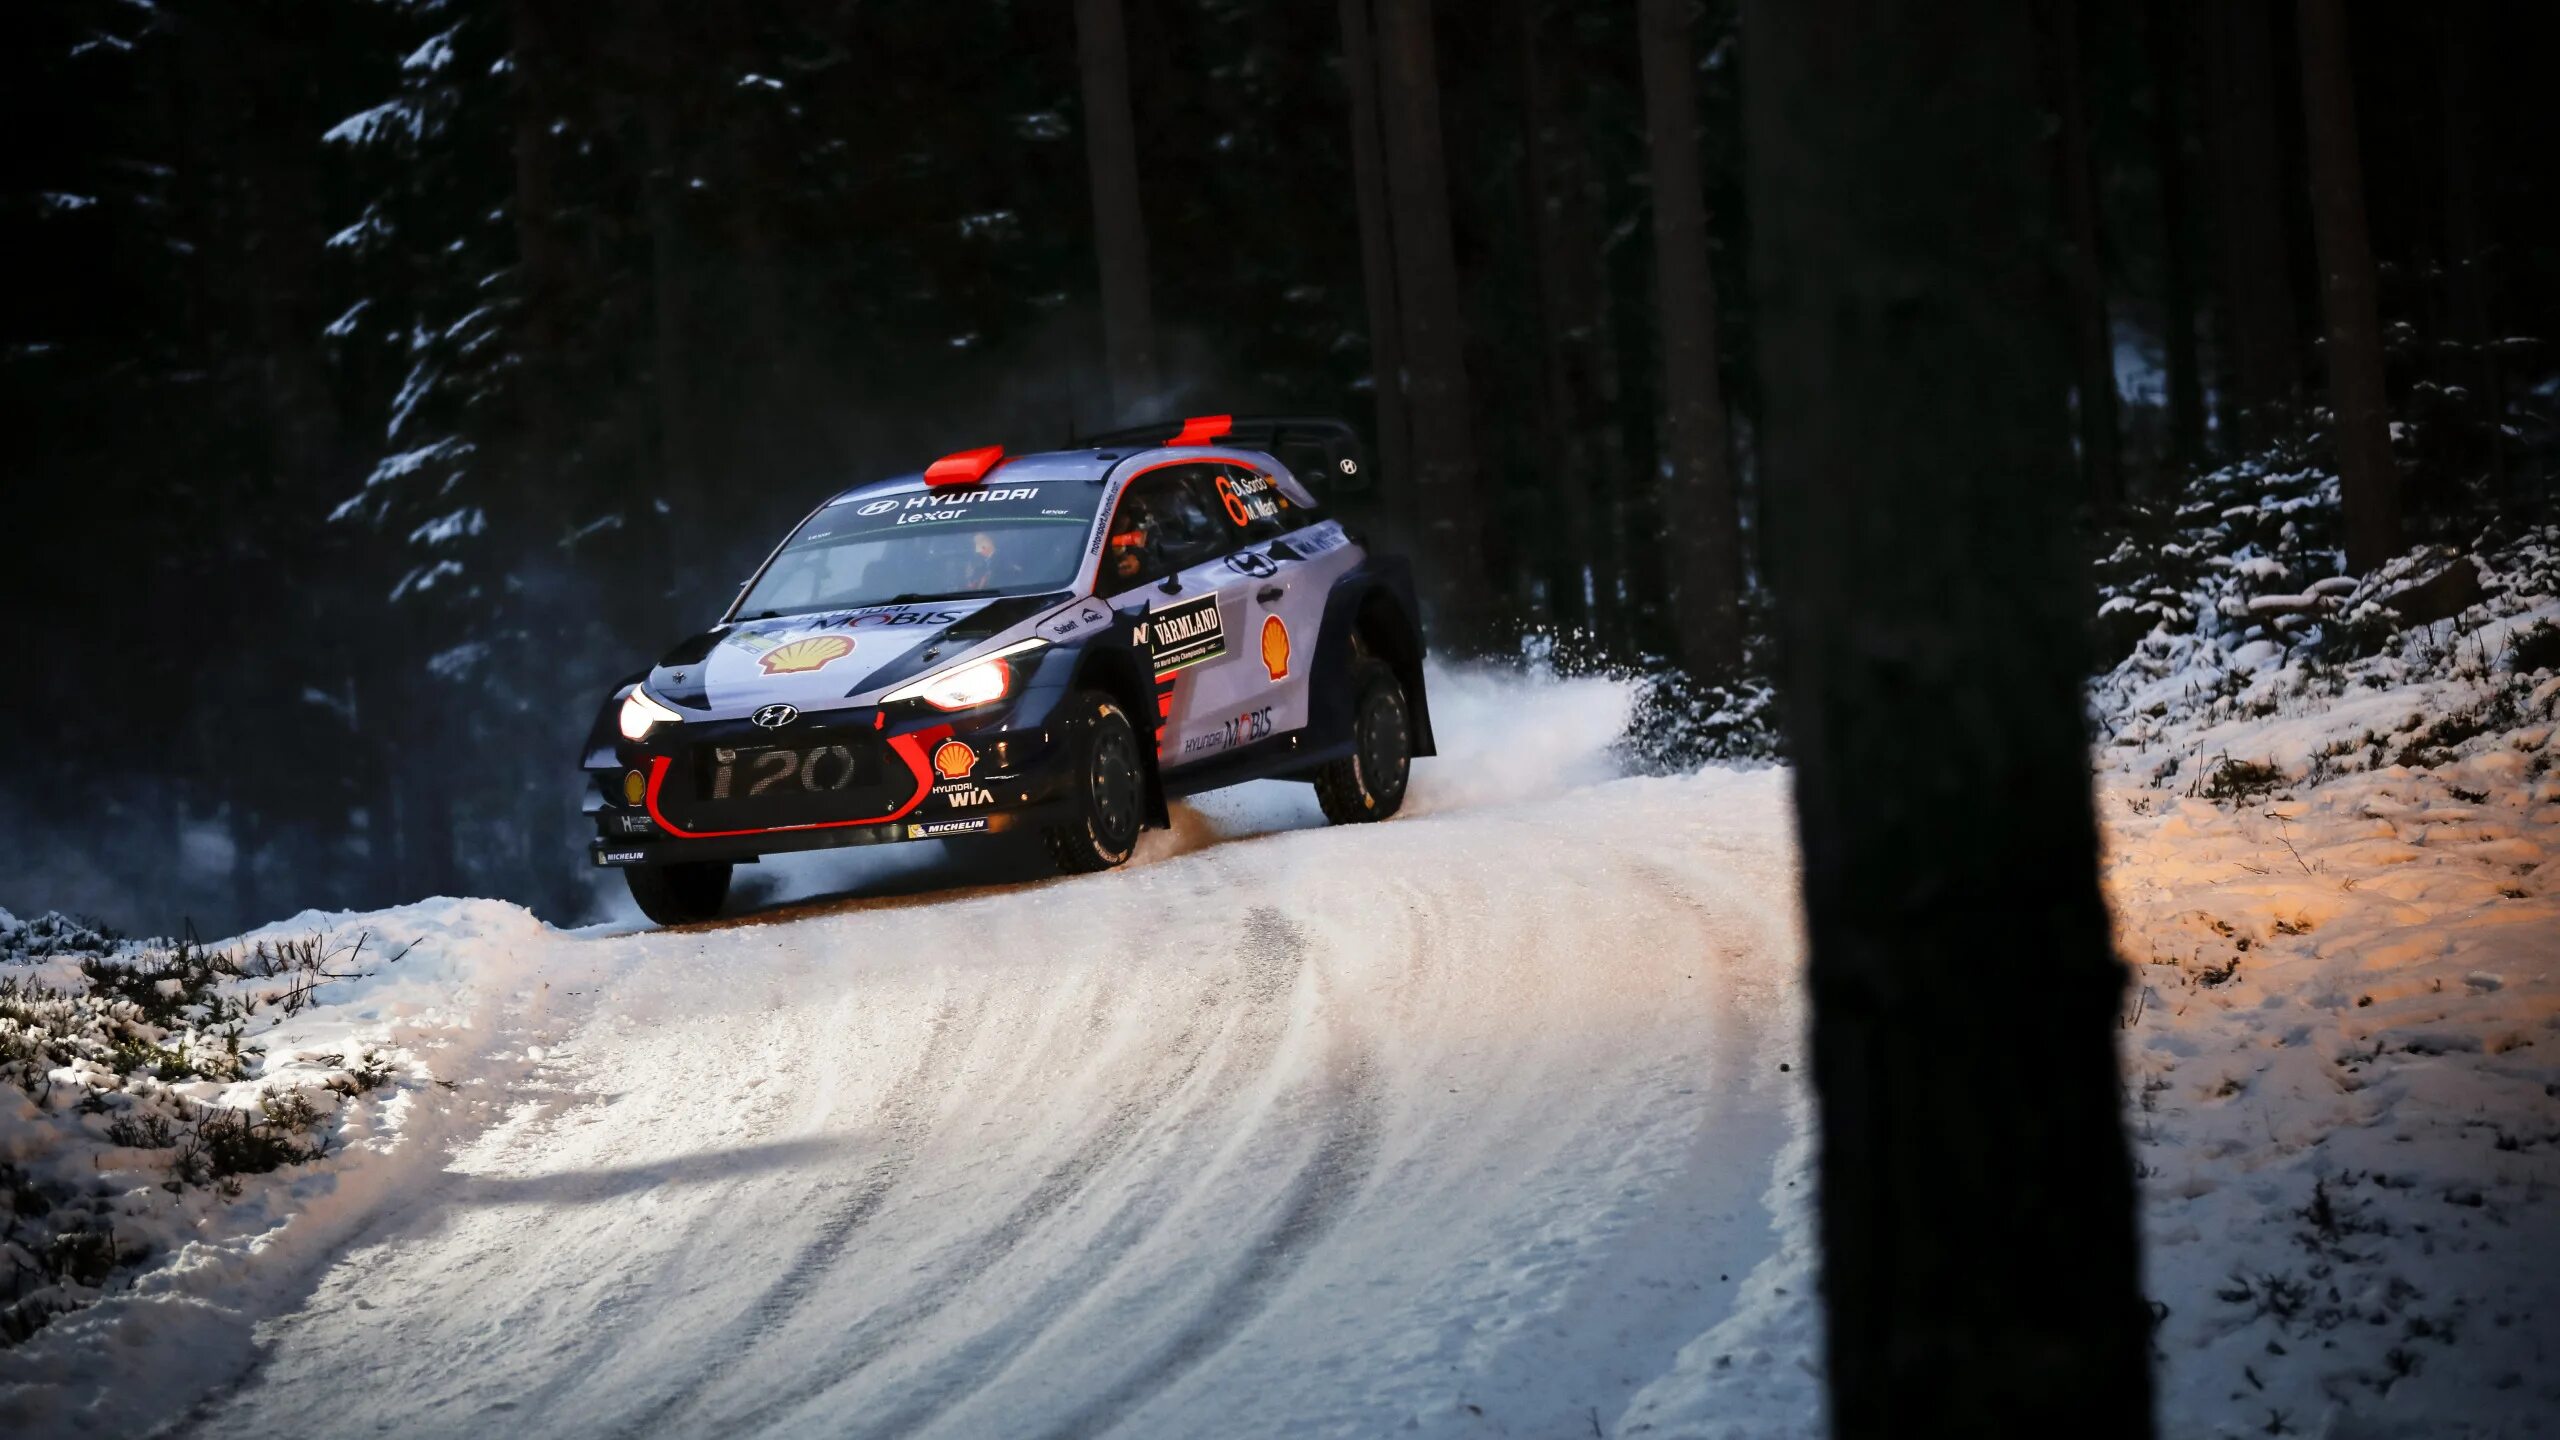 Ралли WRC зима 2007. Ралли WRC зима. Subaru Rally Winter. Subaru Impreza раллийная. Игра машины снег